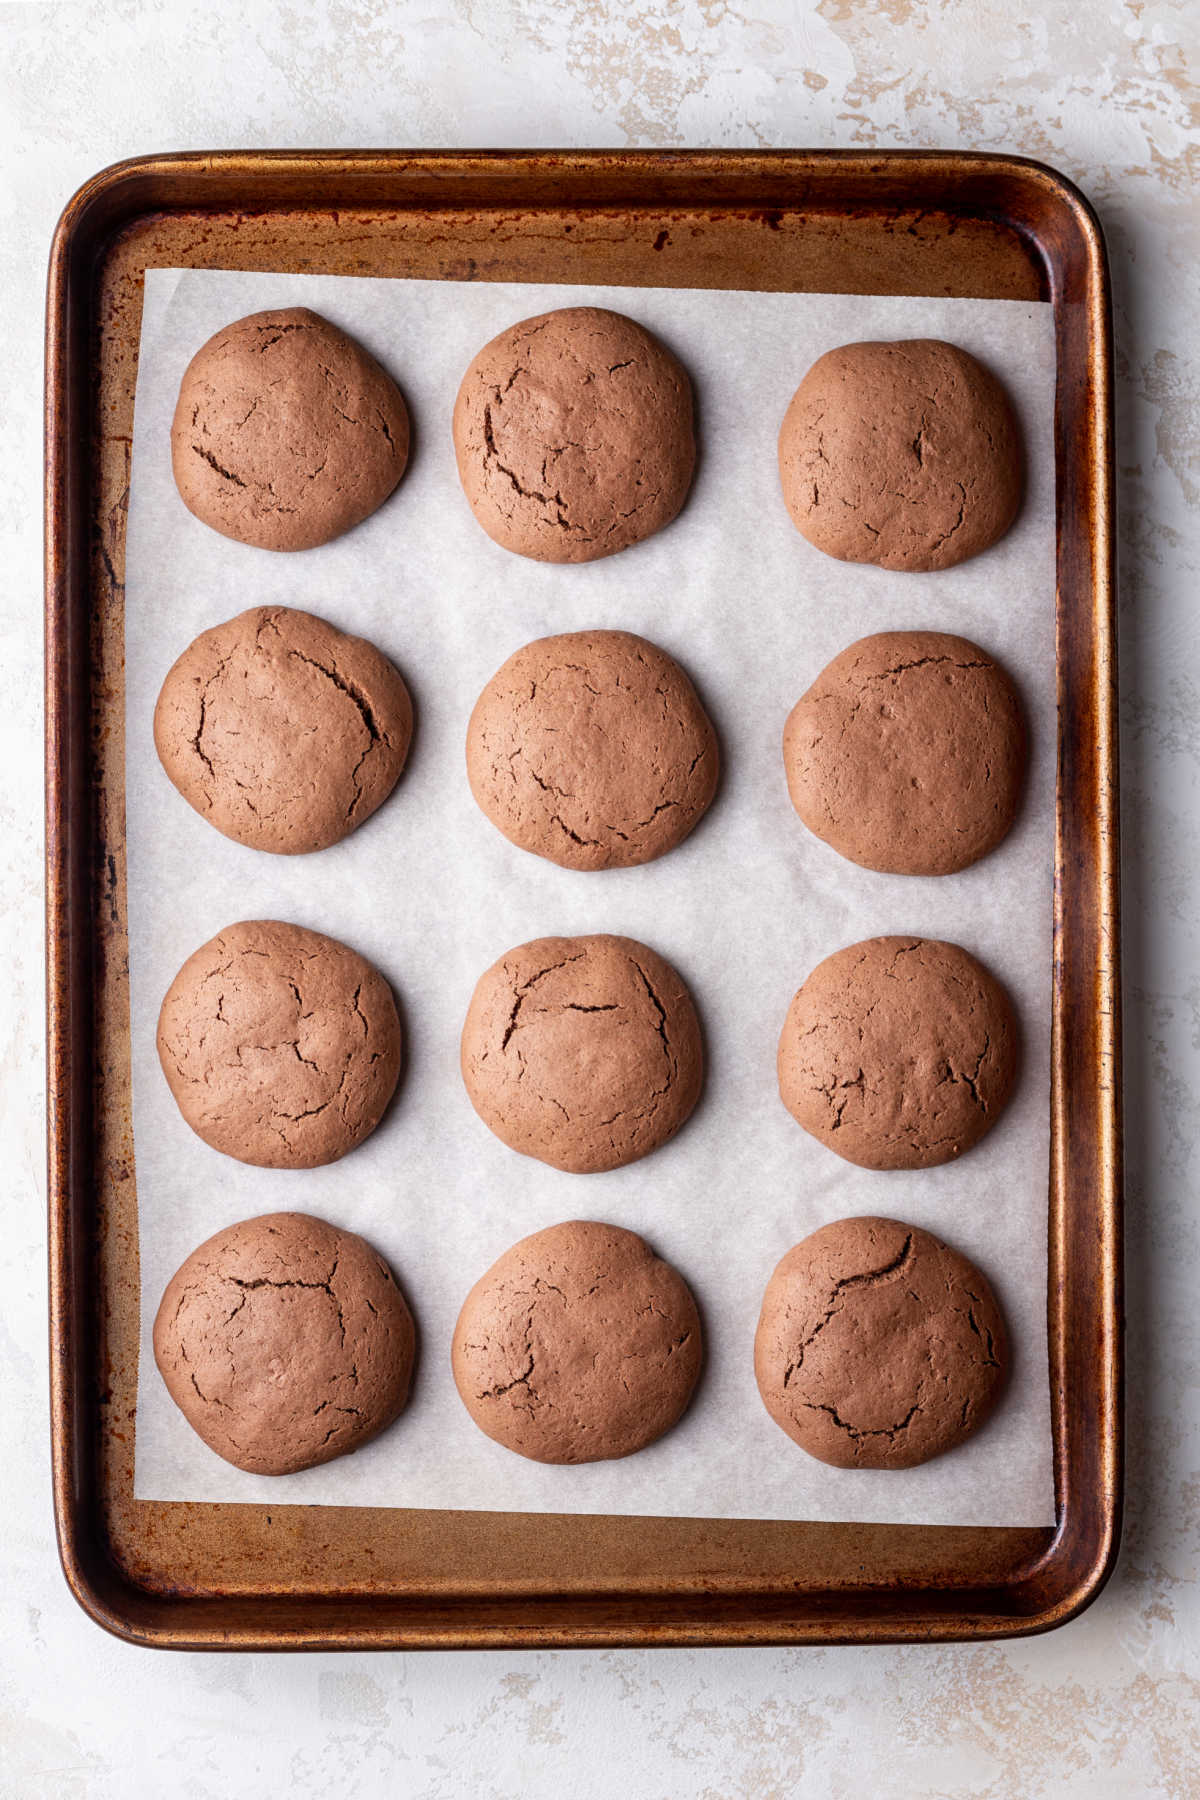 A dozen baked chocolate cookies on a baking sheet. 